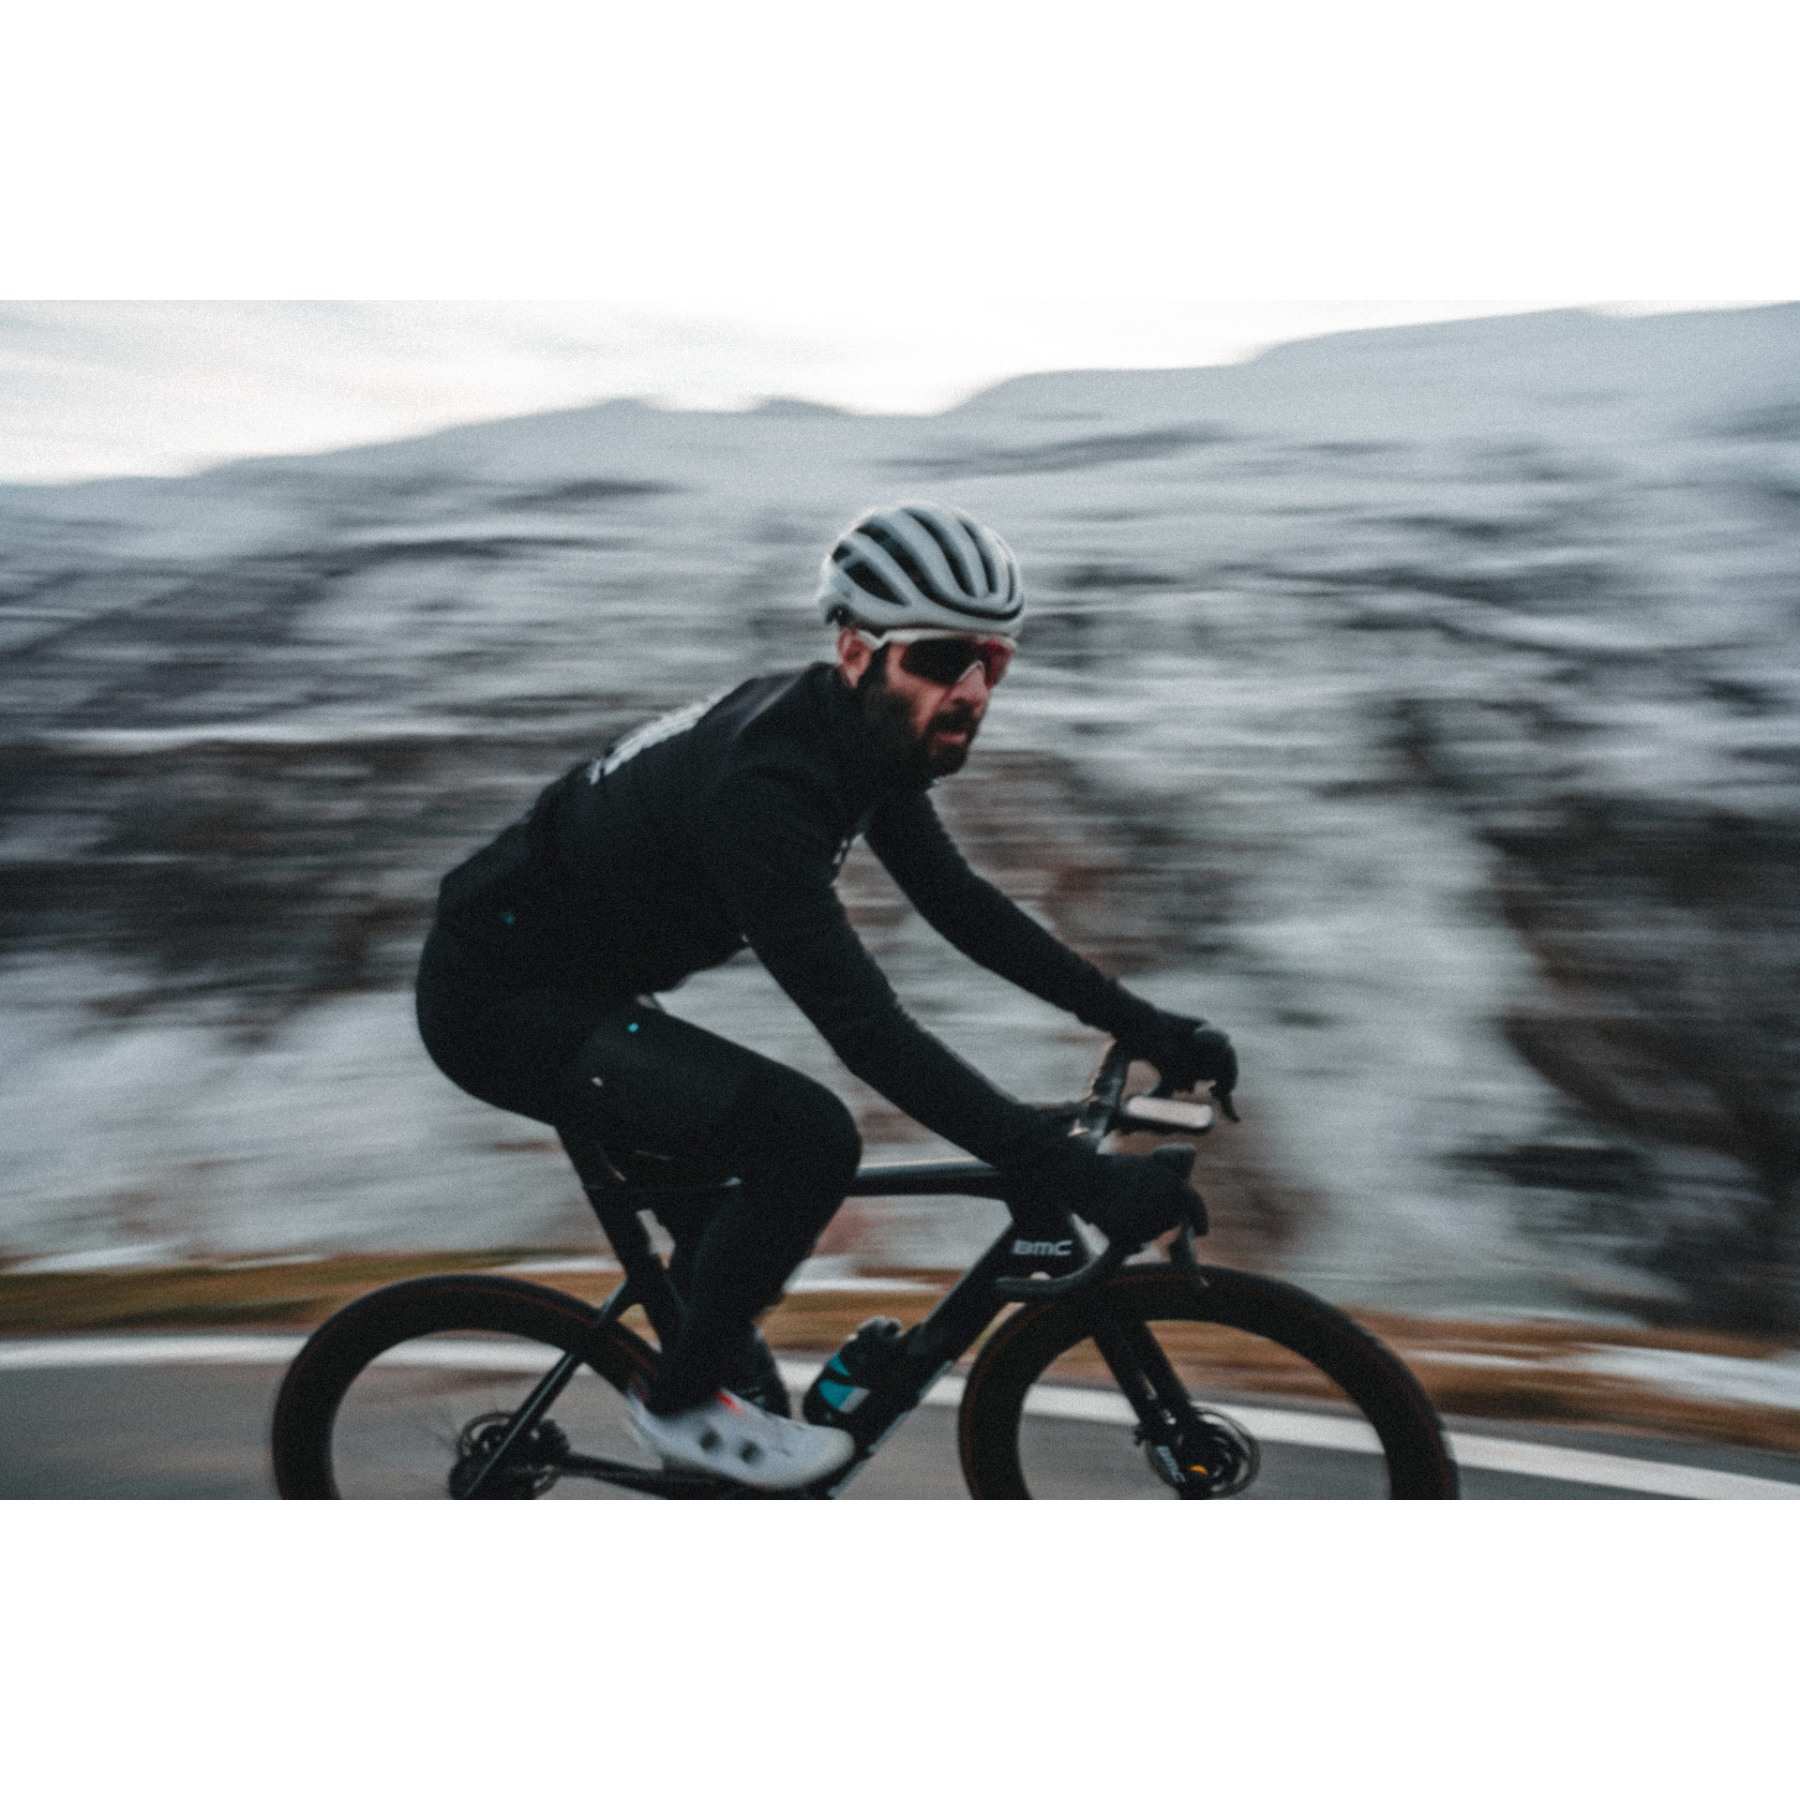 https://images.bike24.com/i/mb/2a/67/87/biehler-deep-winter-bib-tights-men-black-5-1597749.jpg